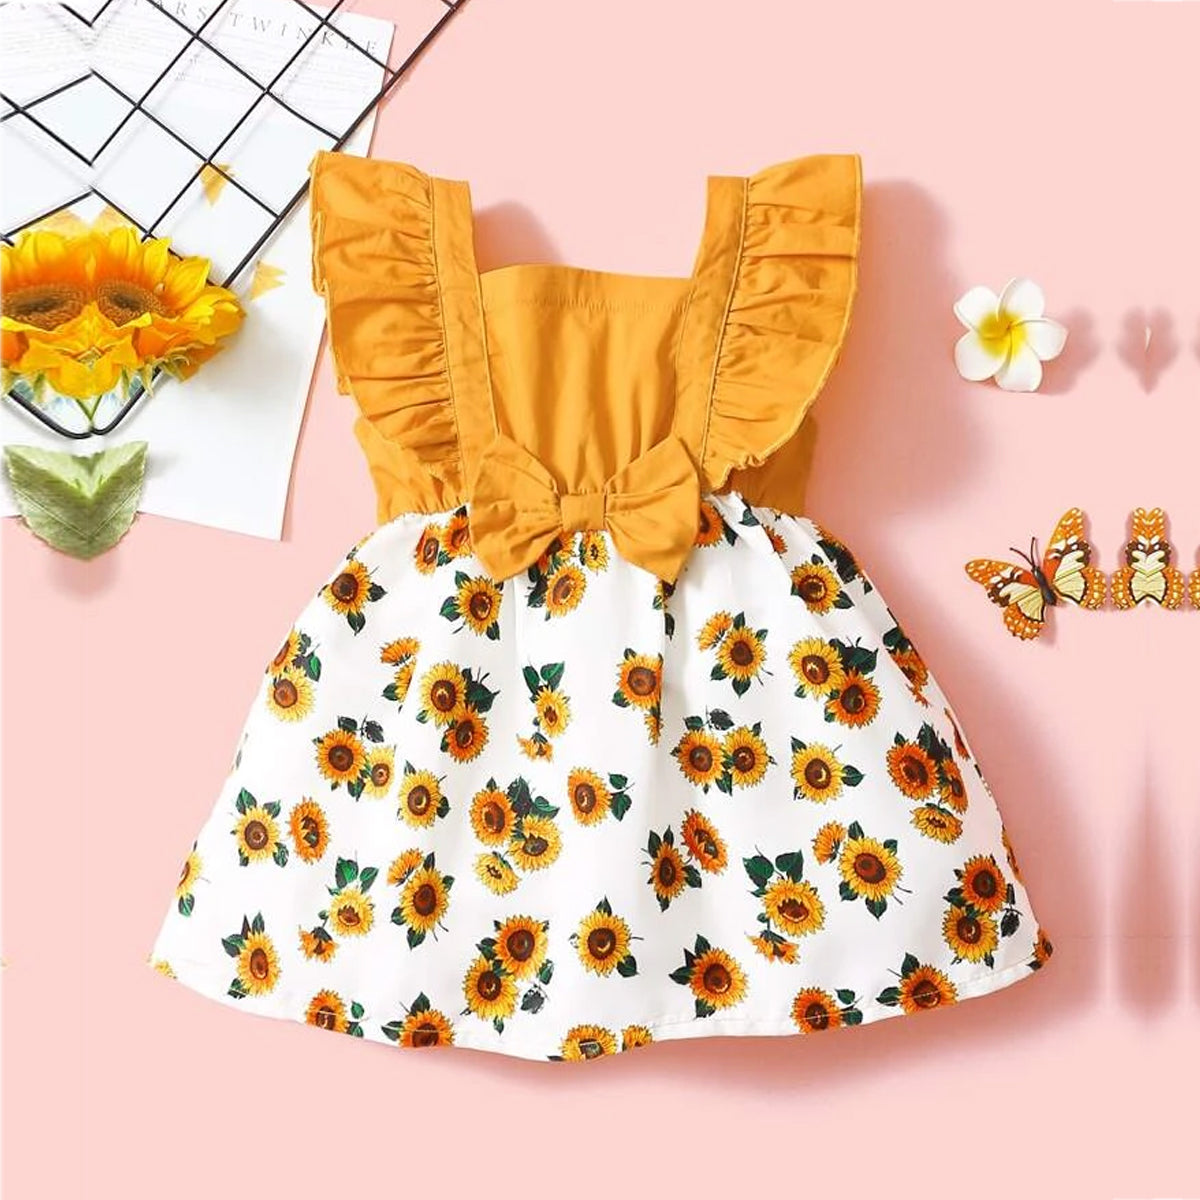 BabyGirl Princess Zeebra & Yellow Floral designer Tunic Dresses Combo Pack for Baby Girls.